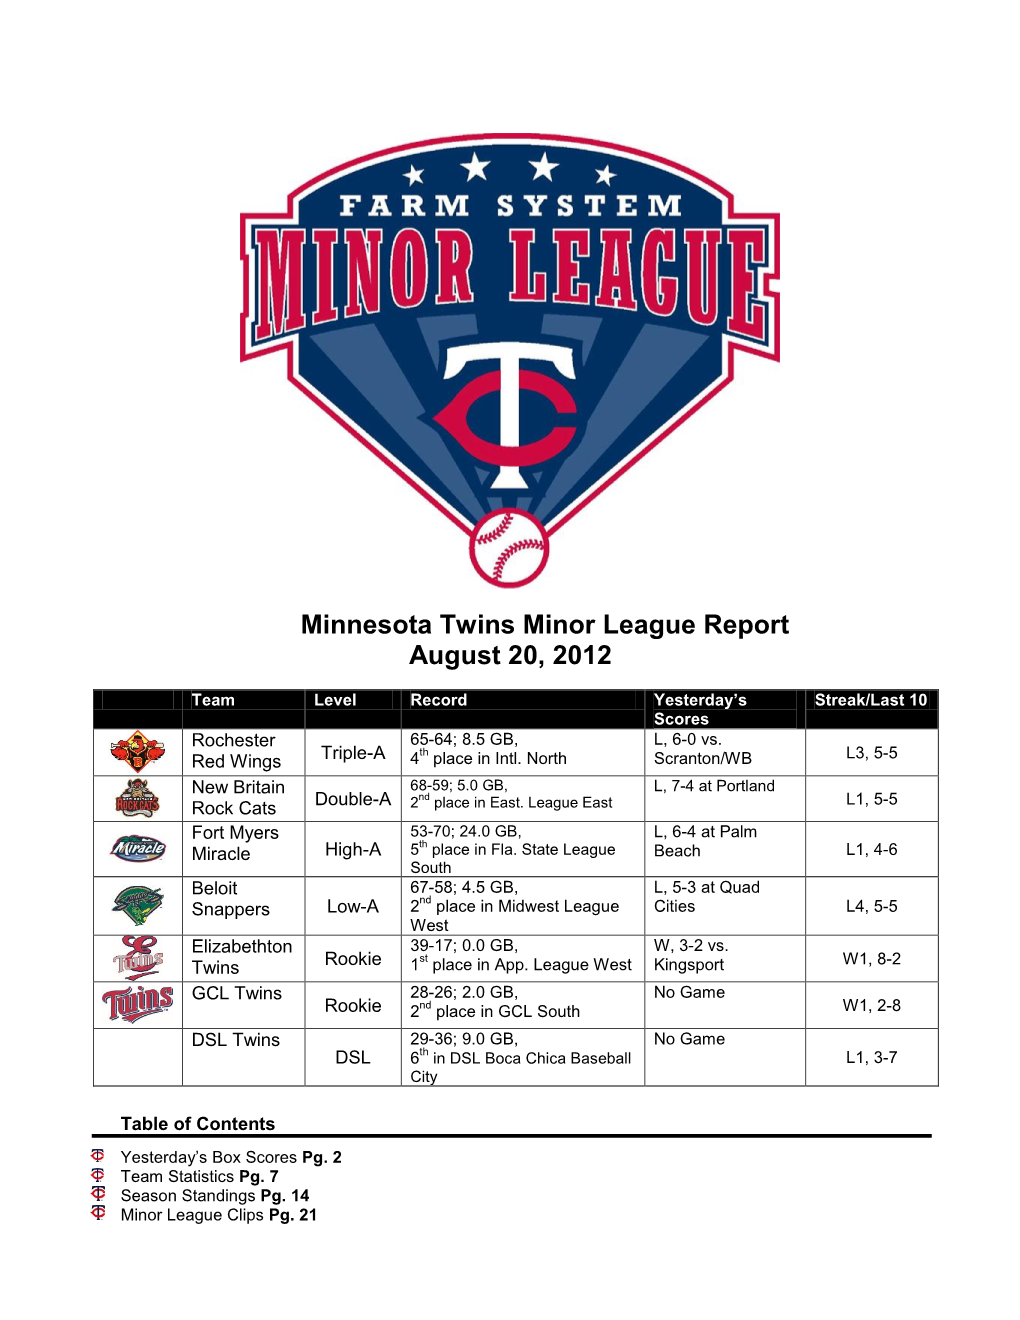 Minnesota Twins Minor League Report August 20, 2012